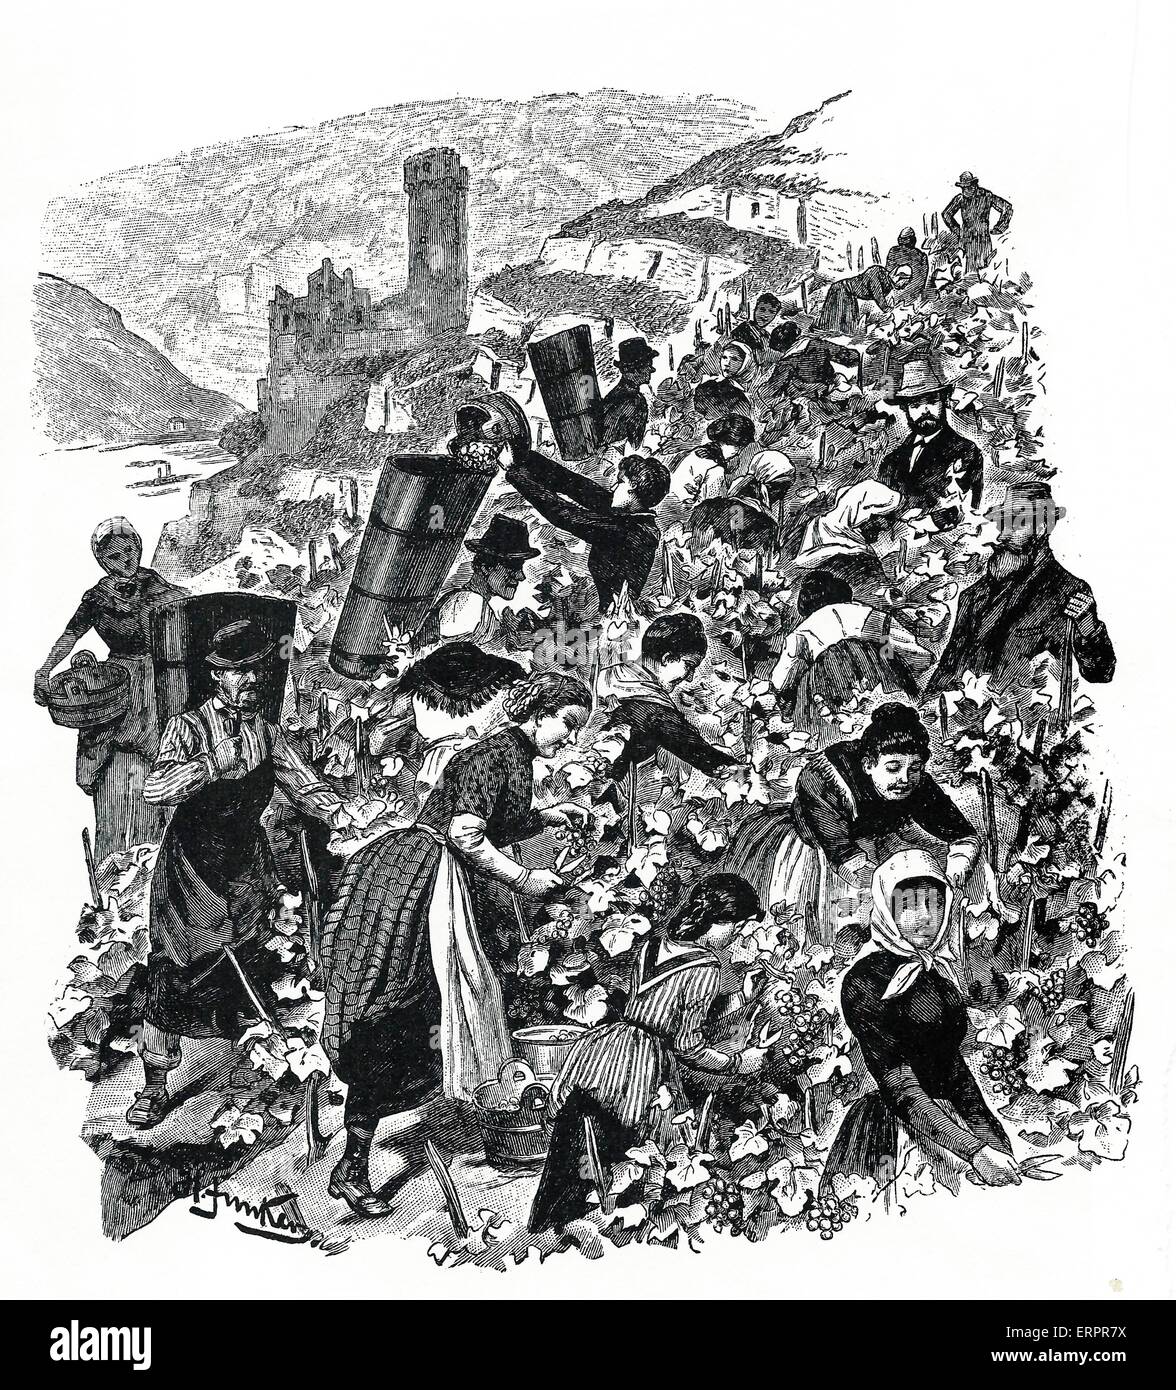 People harvesting grapes, historic illustration. Stock Photo